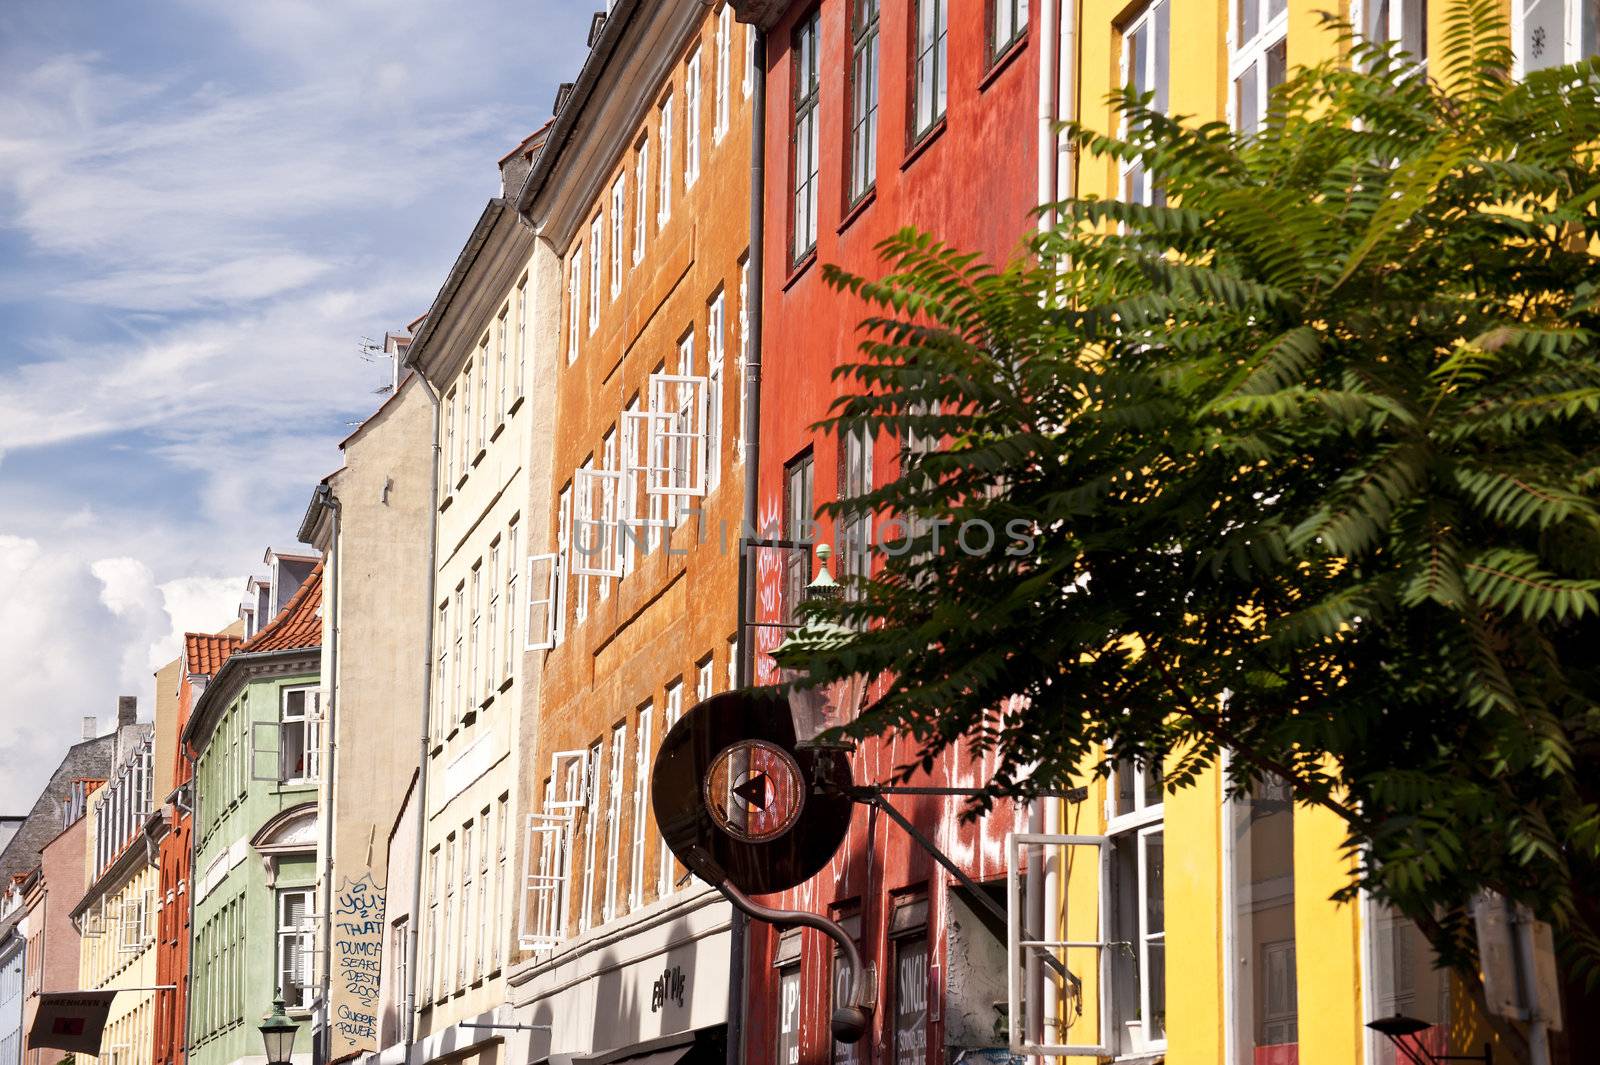 Shopping in Copenhagen by 3quarks